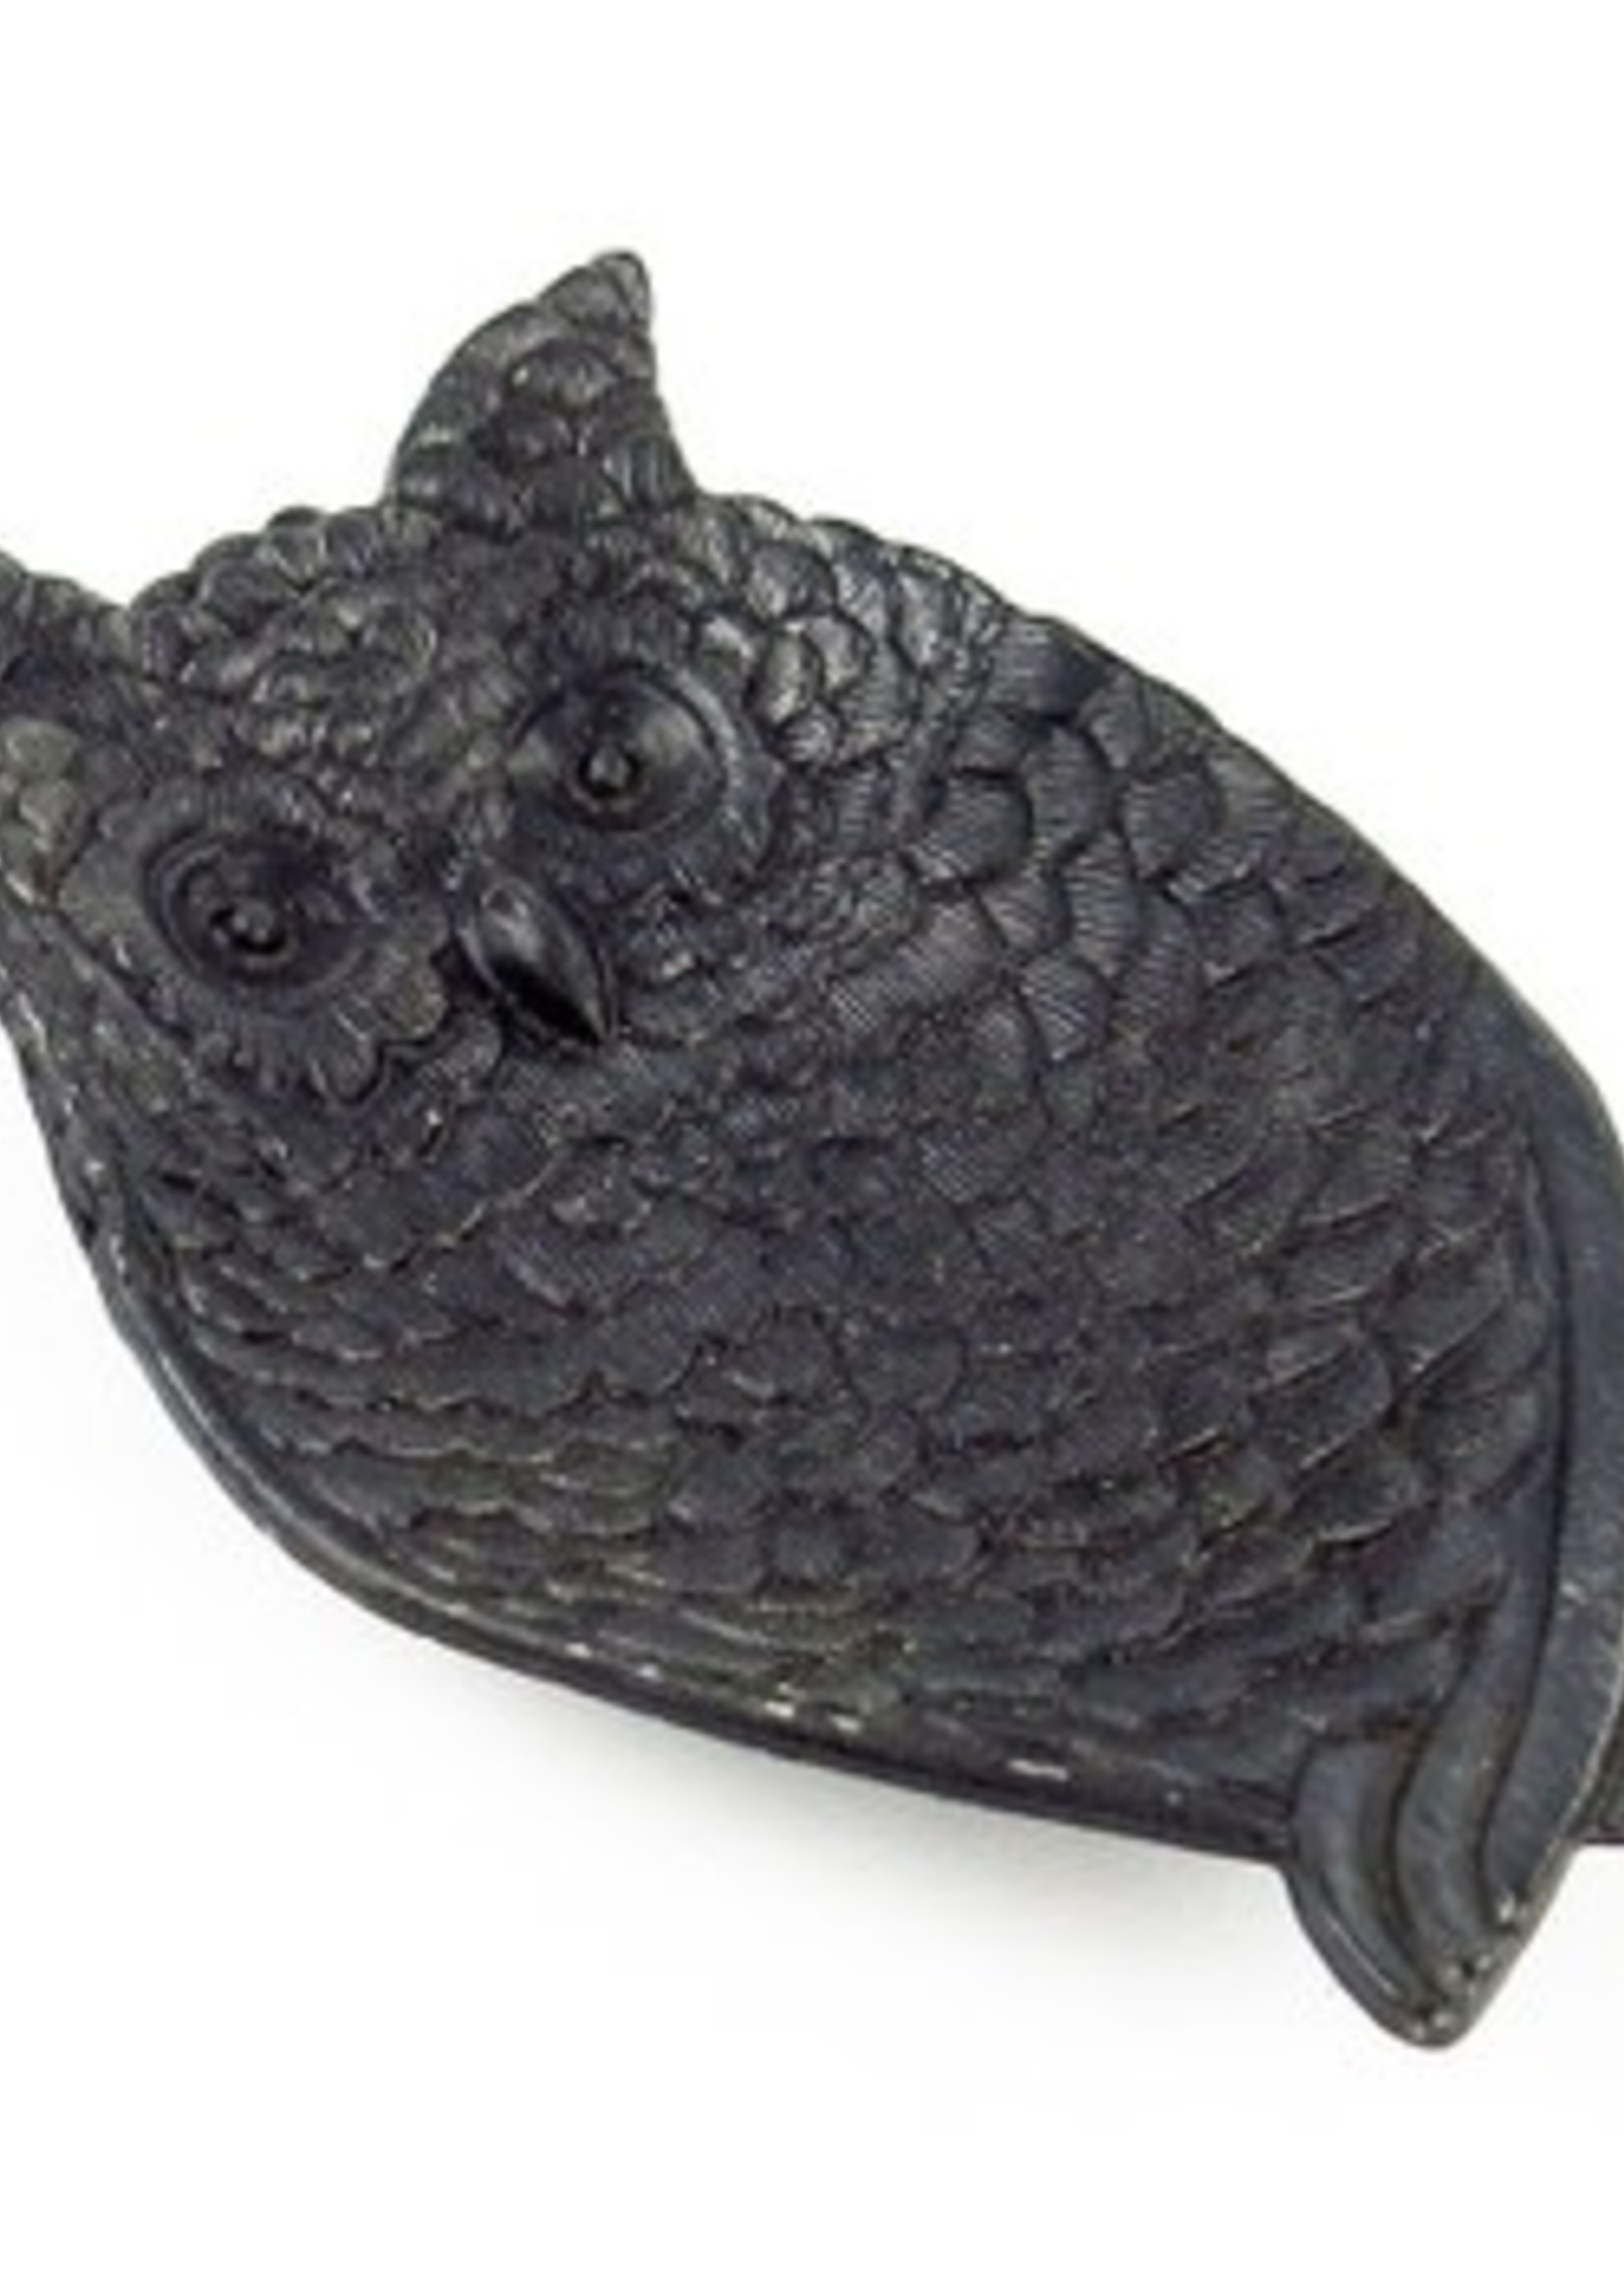 Pewter Owl Dish in Grey Black Finish